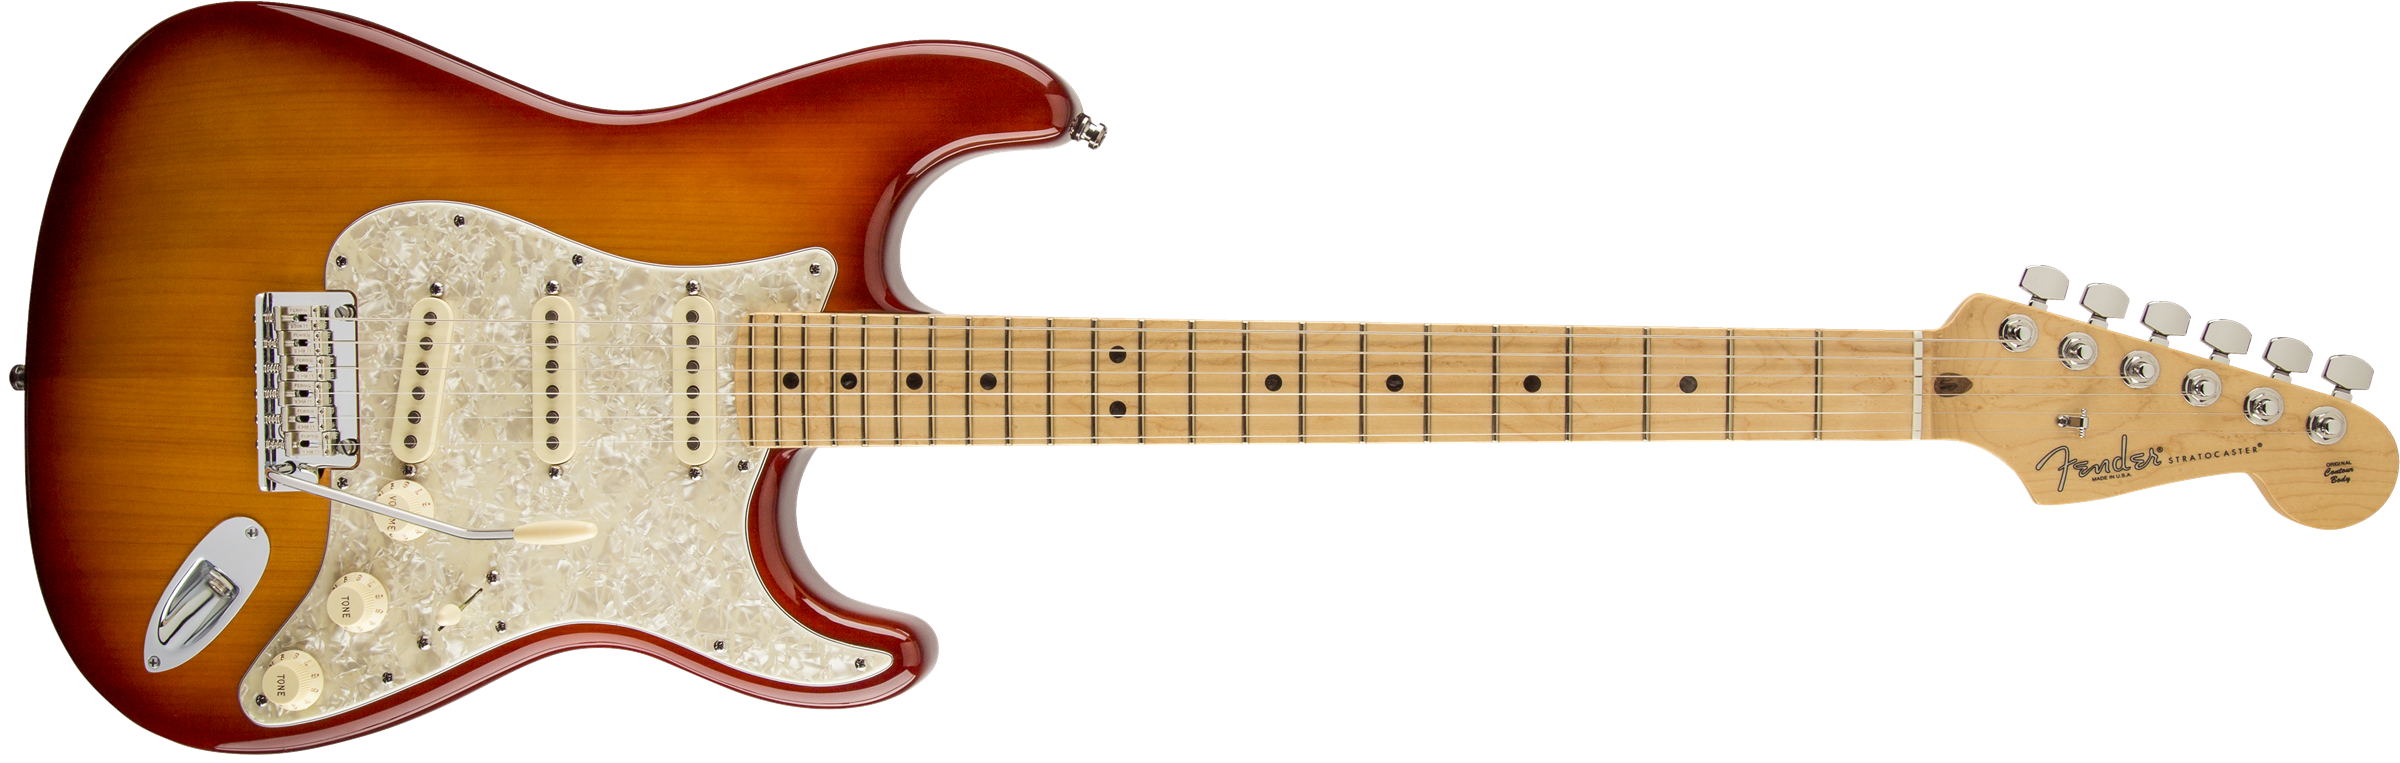 Fender Limited Edition Select Port Orford Cedar Stratocaster, Figured Maple Fingerboard, Sienna Sunburst 0170812847 Discontinued